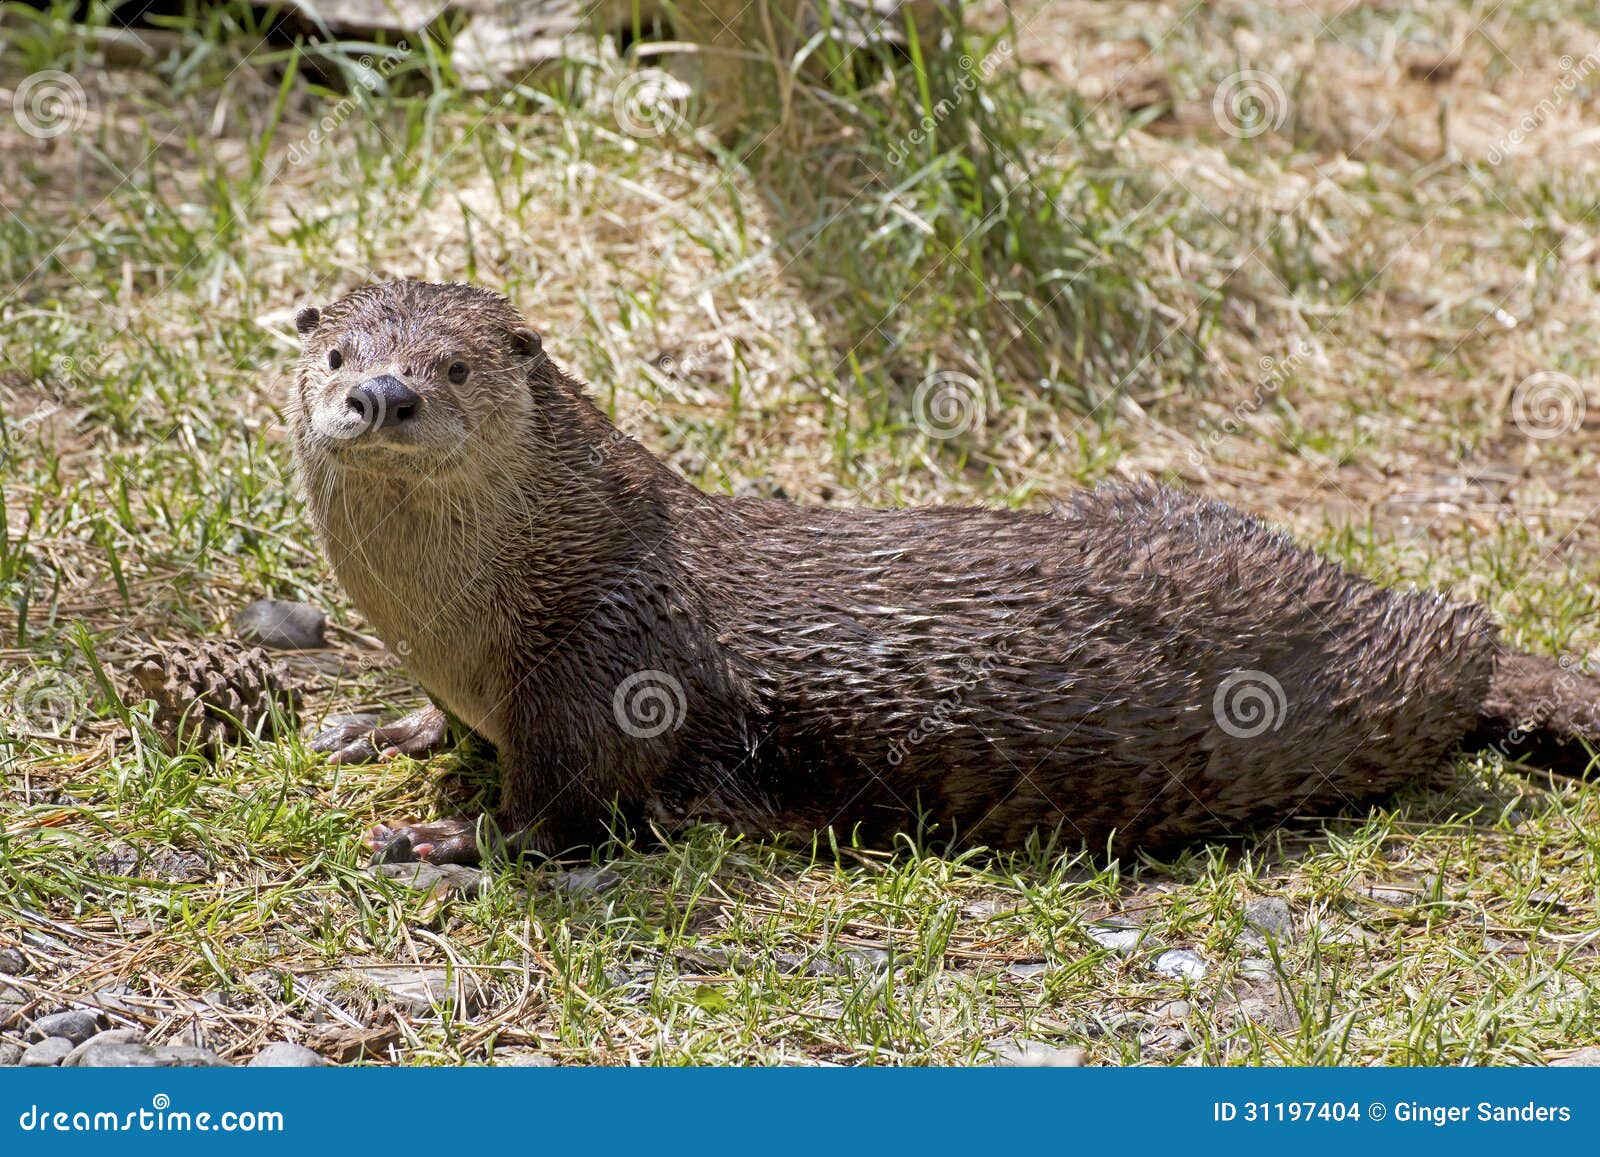 happy river otter sunning on grassy bank